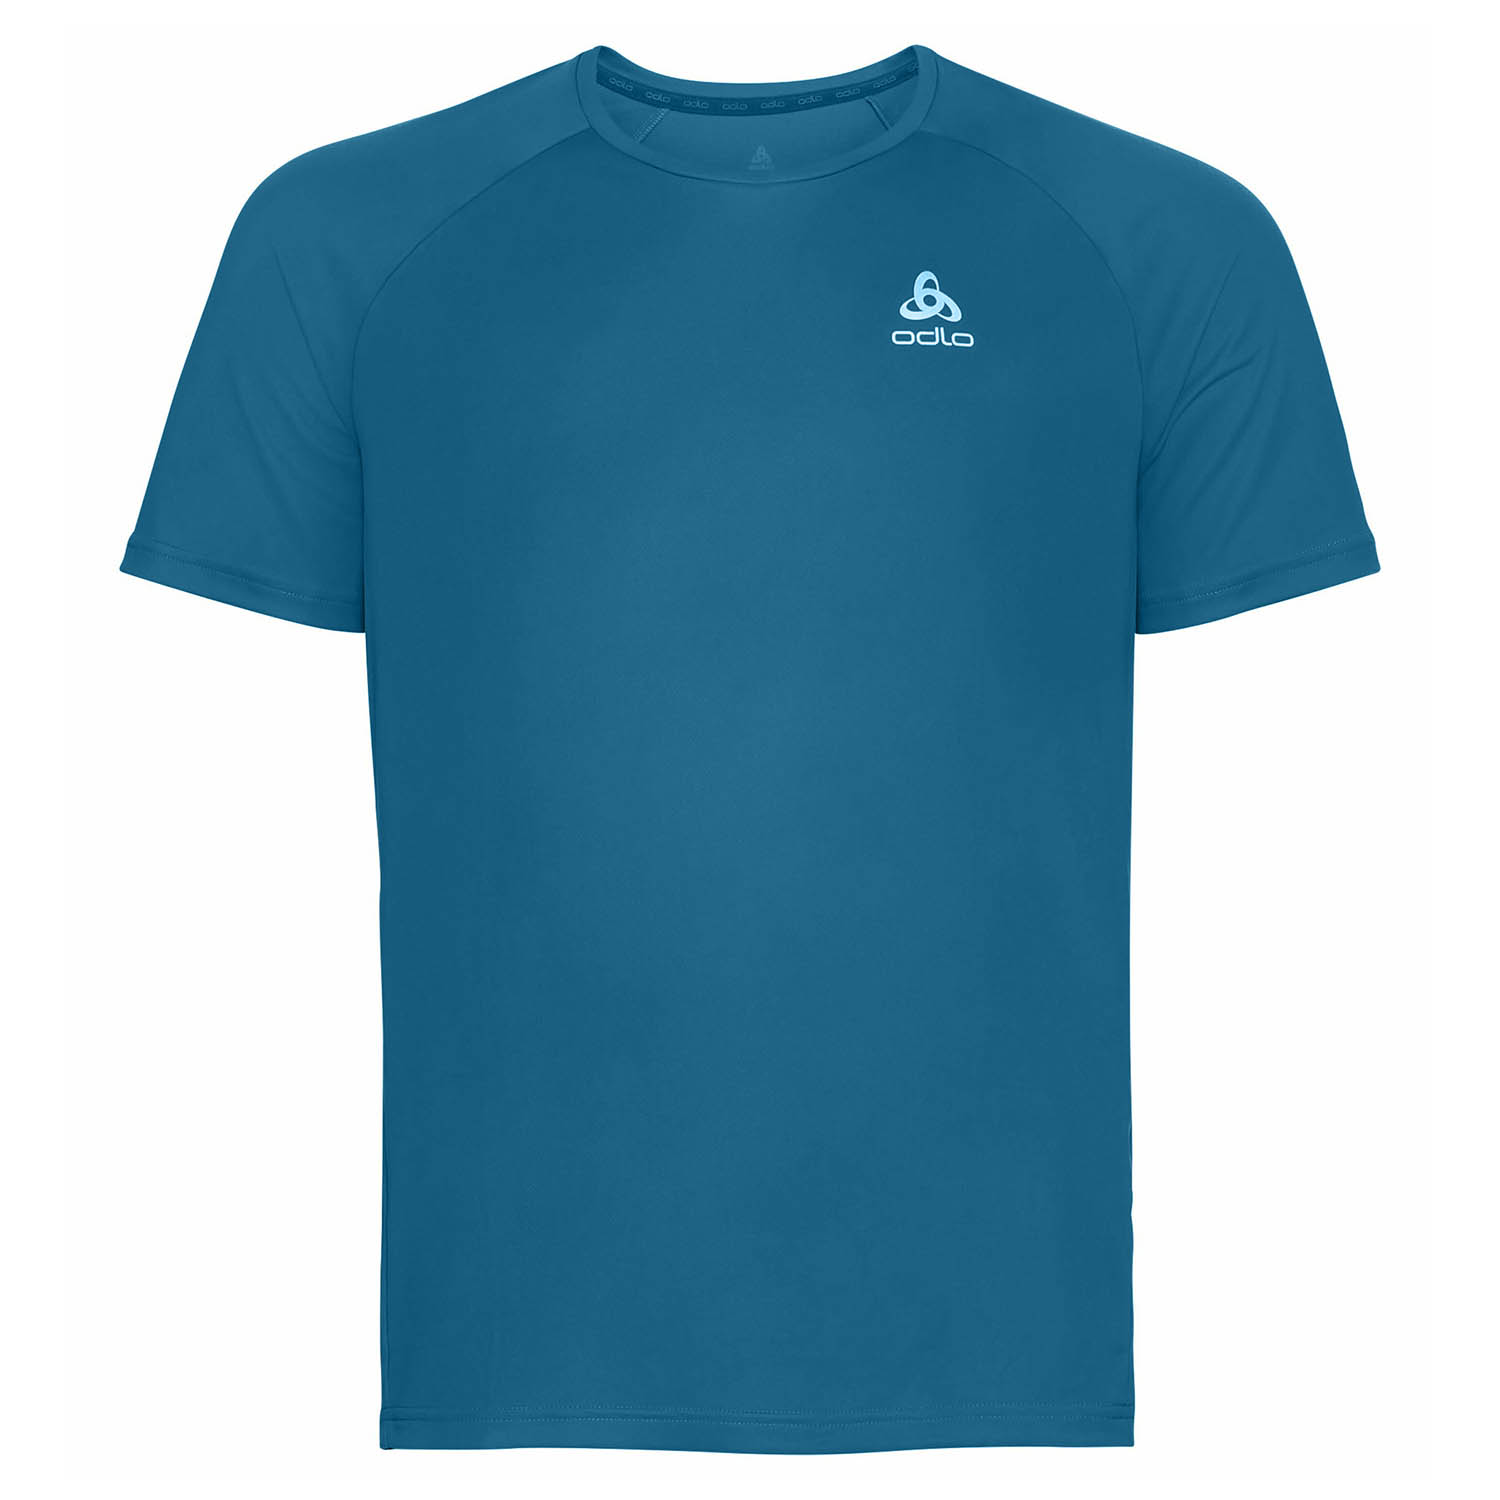 Odlo Crew Essential Chill-Tec Camiseta - Saxony Blue